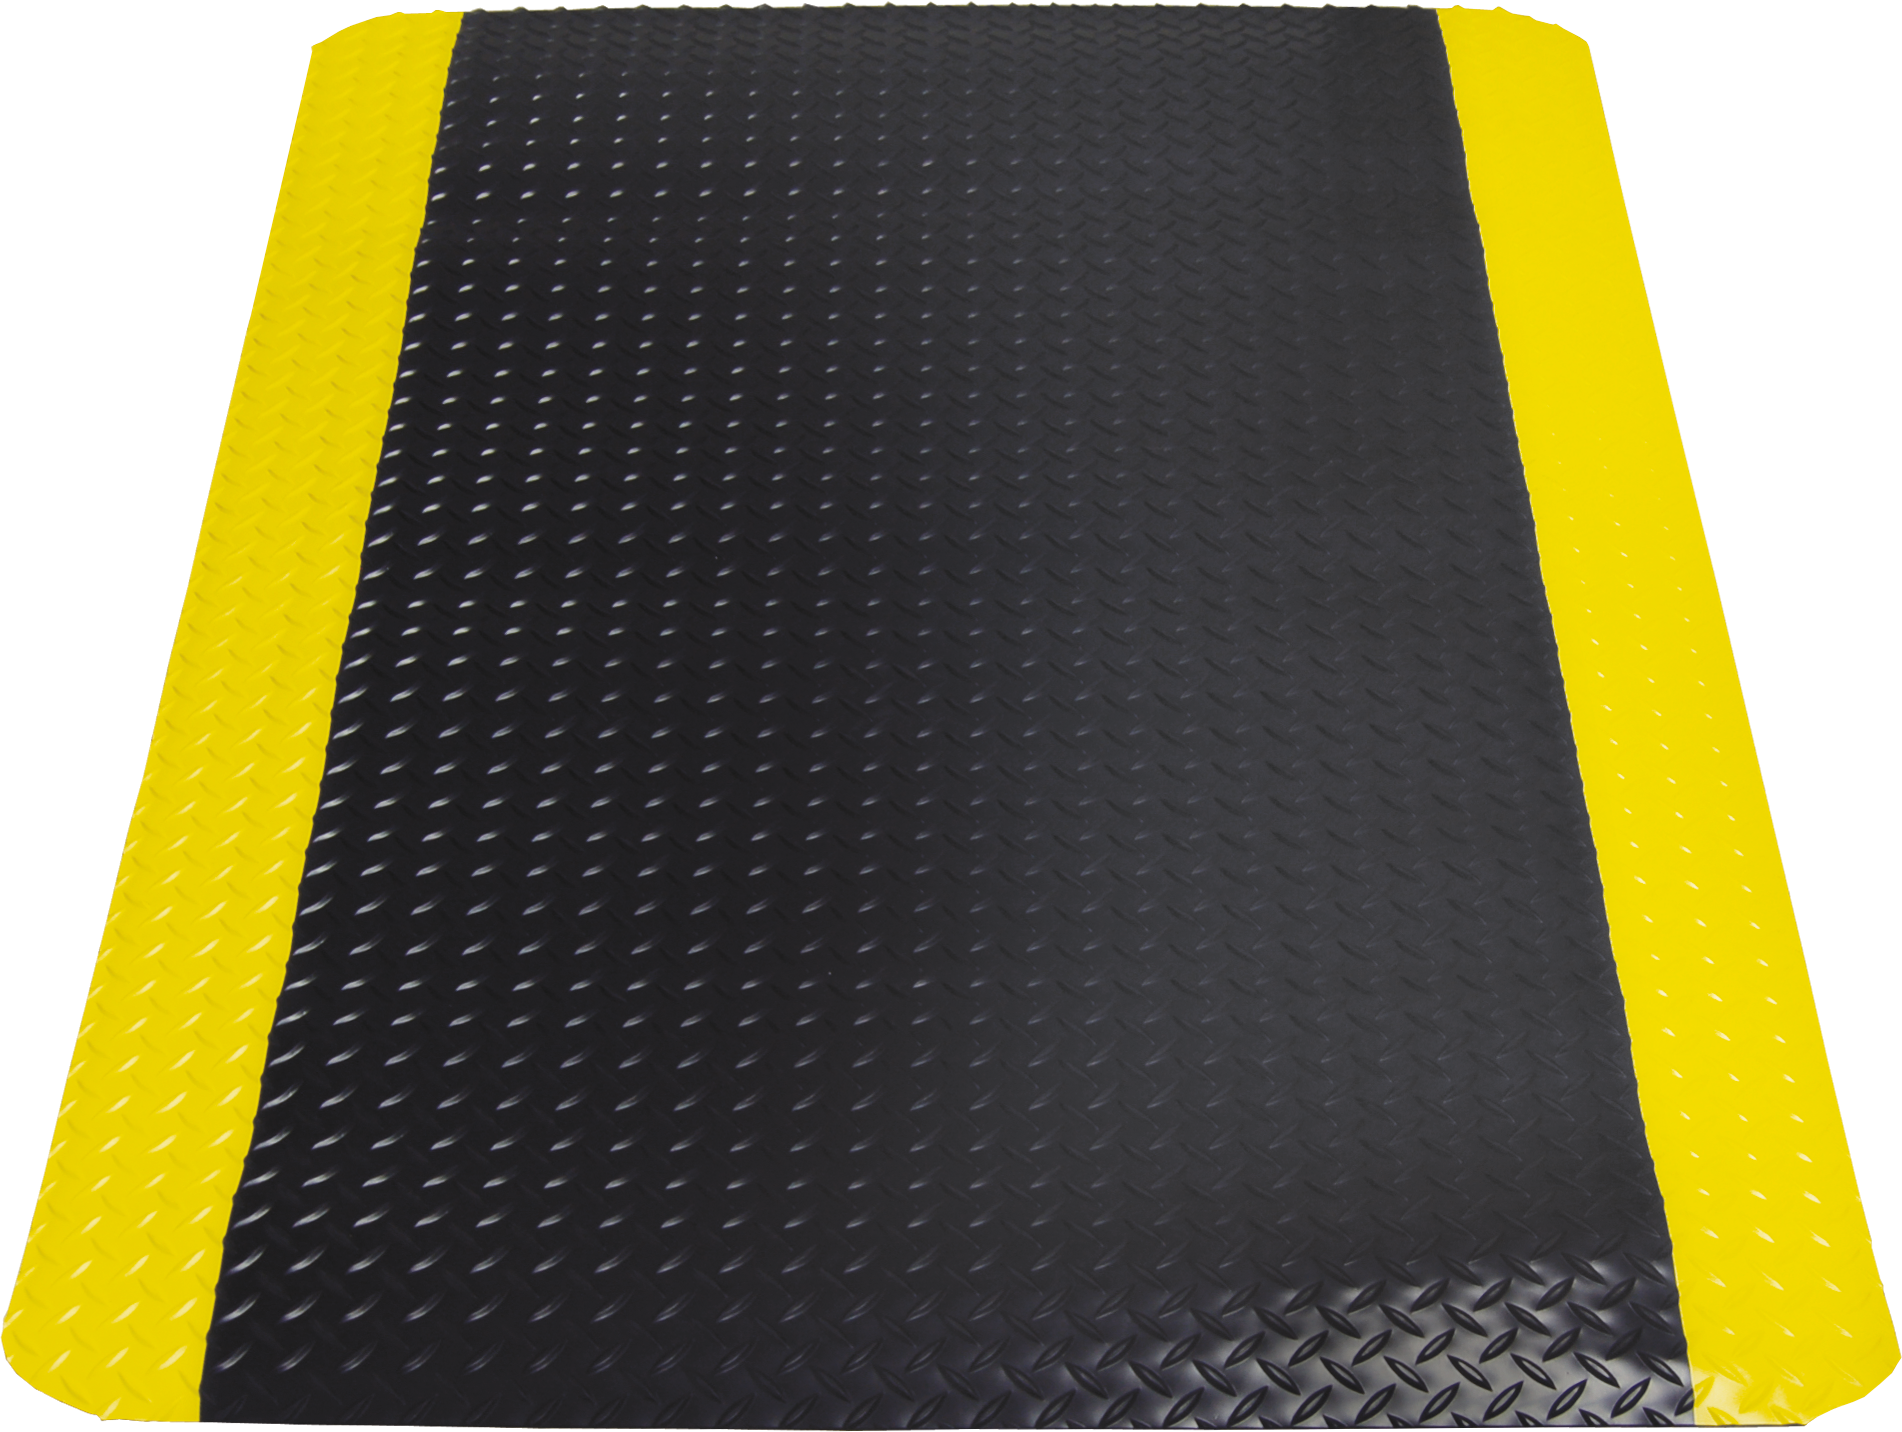 Bodenmatte Yoga Deck Ultra Zuschnitt 600x900mm schwarz/gelb